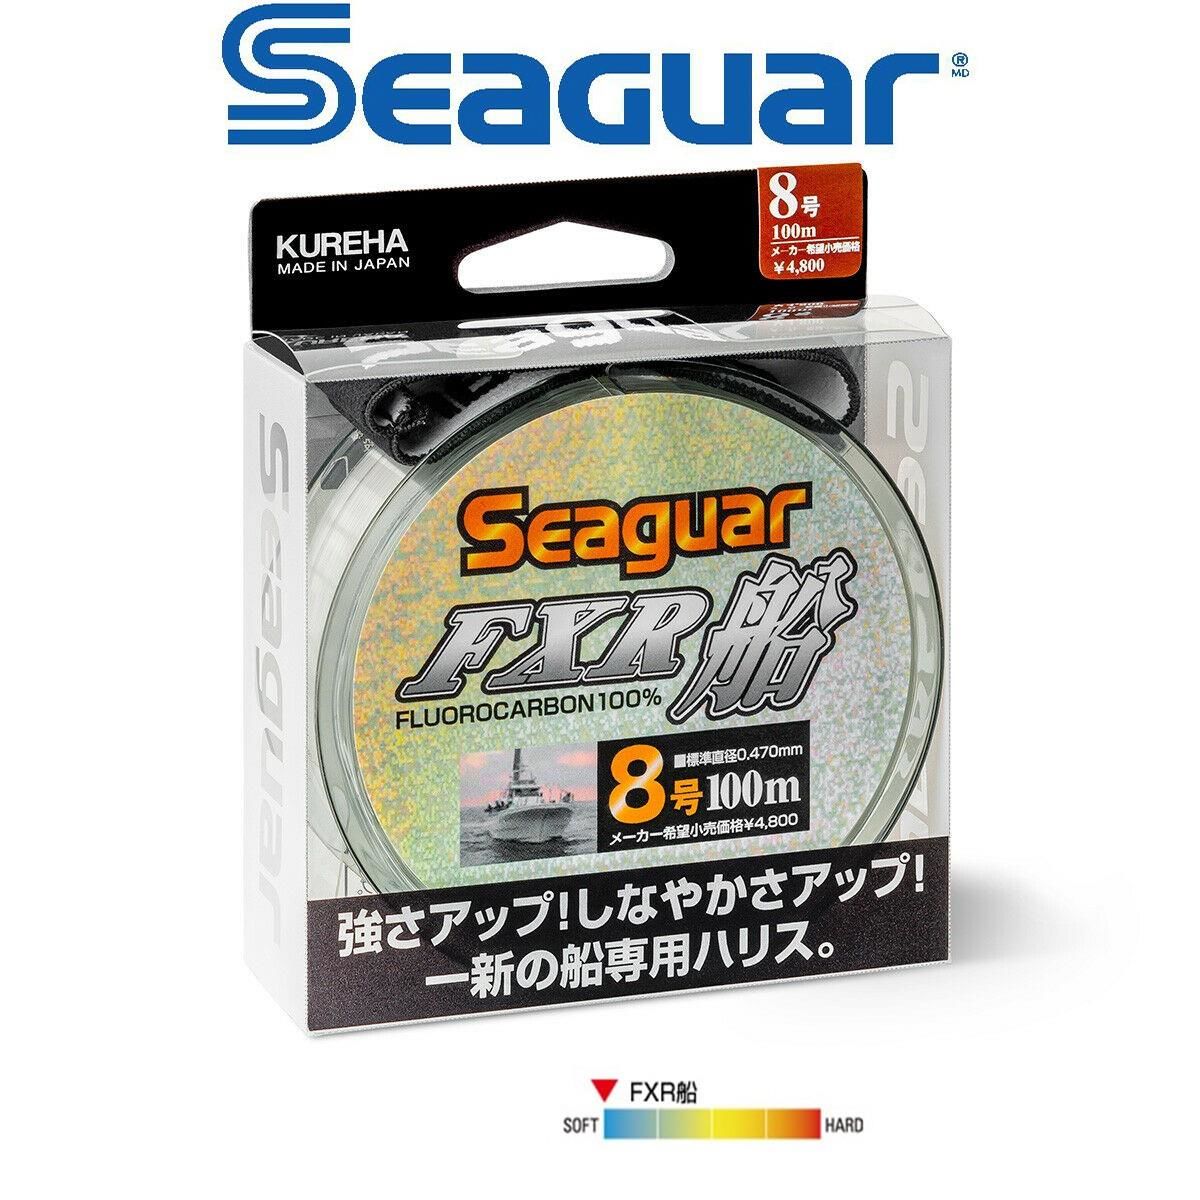 Seaguar Fxr Fune %100 F.C. 100mt 16 - 0.660 mm